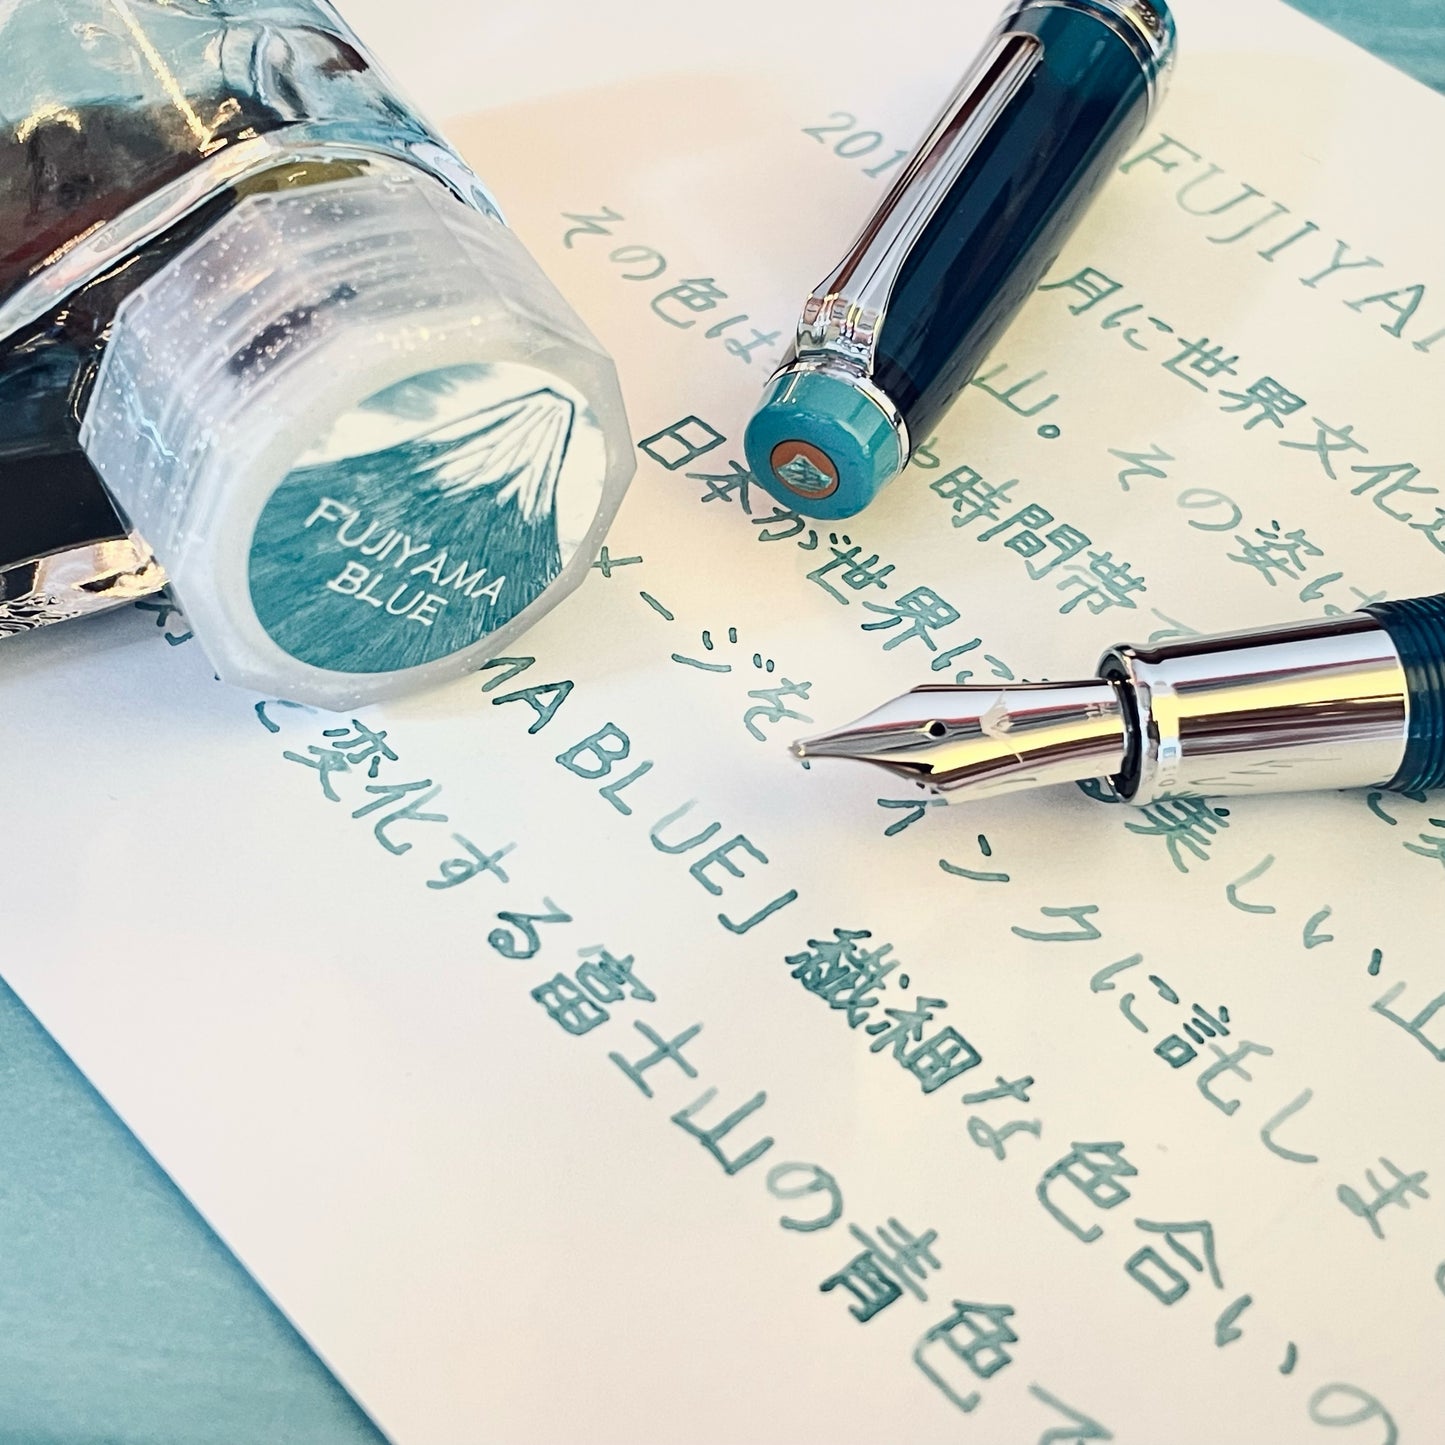 BUNGUBOX Original Fountain Pen: FUJIYAMA BLUE REALO